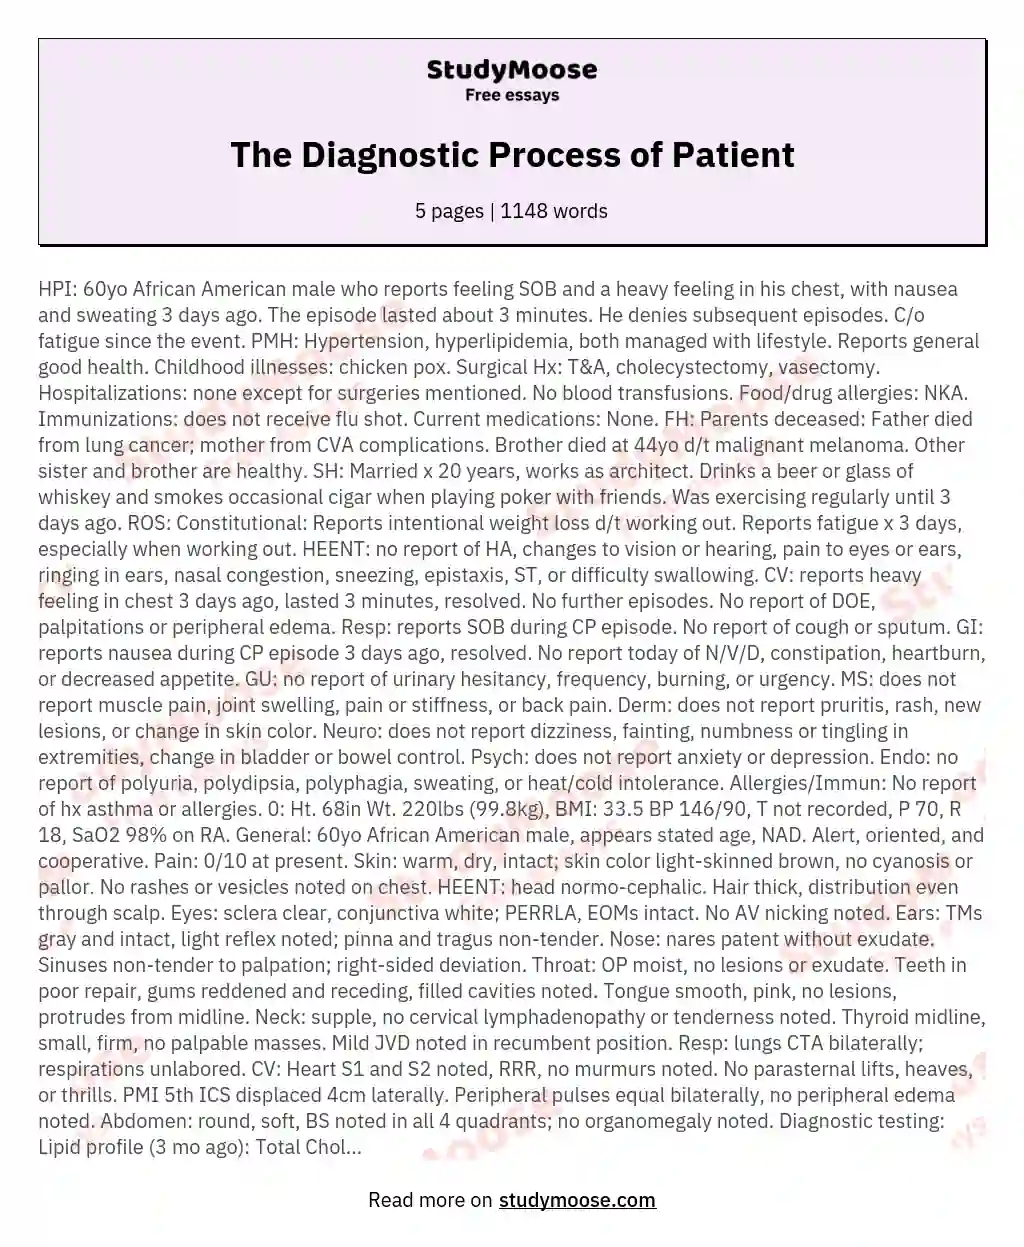 The Diagnostic Process of Patient essay